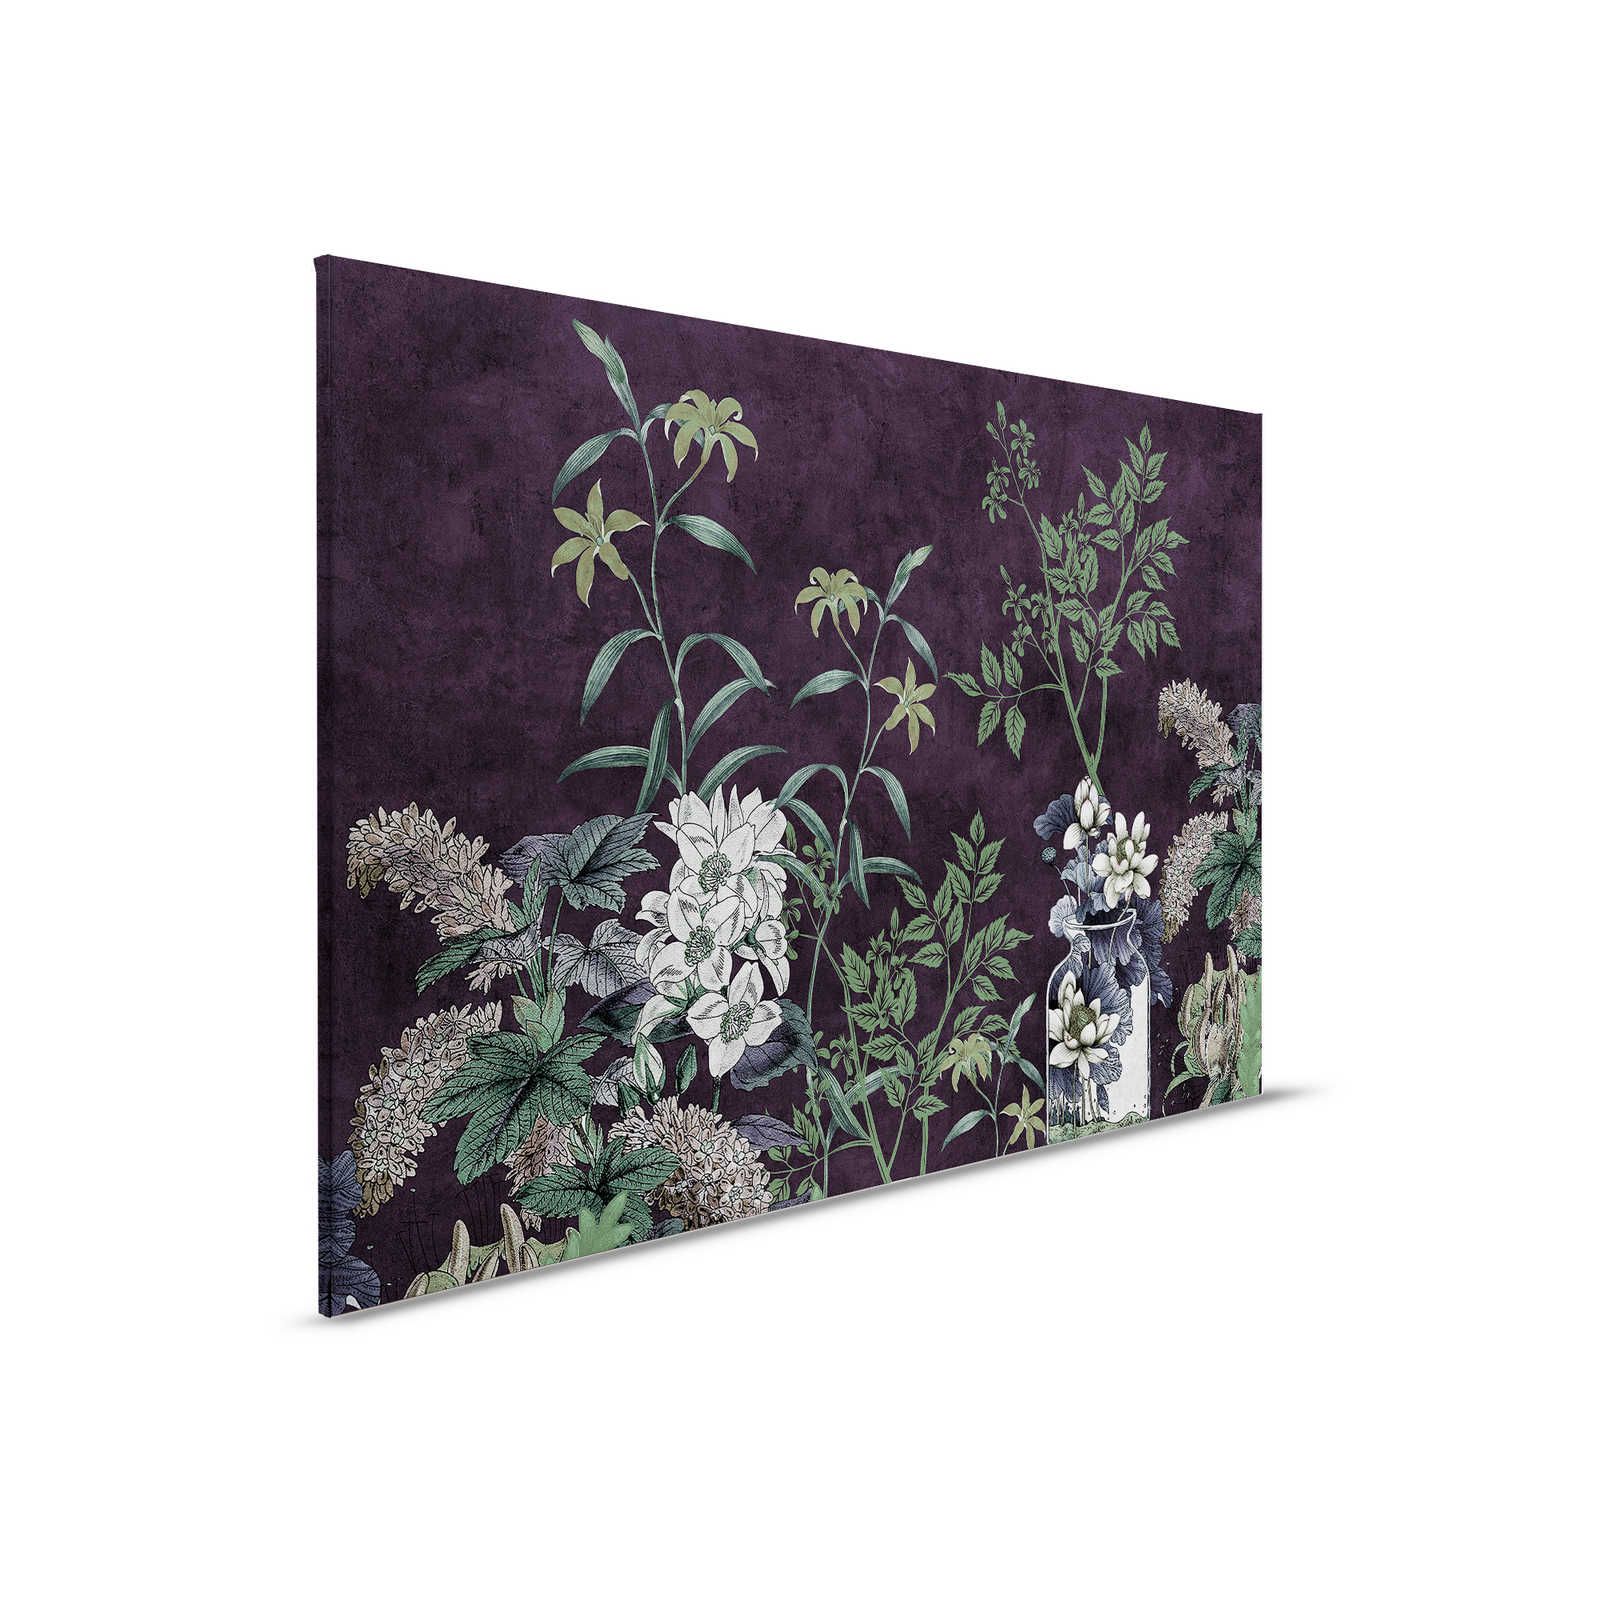 Camera oscura 1 - Pittura su tela nera con motivo botanico verde - 0,90 m x 0,60 m
